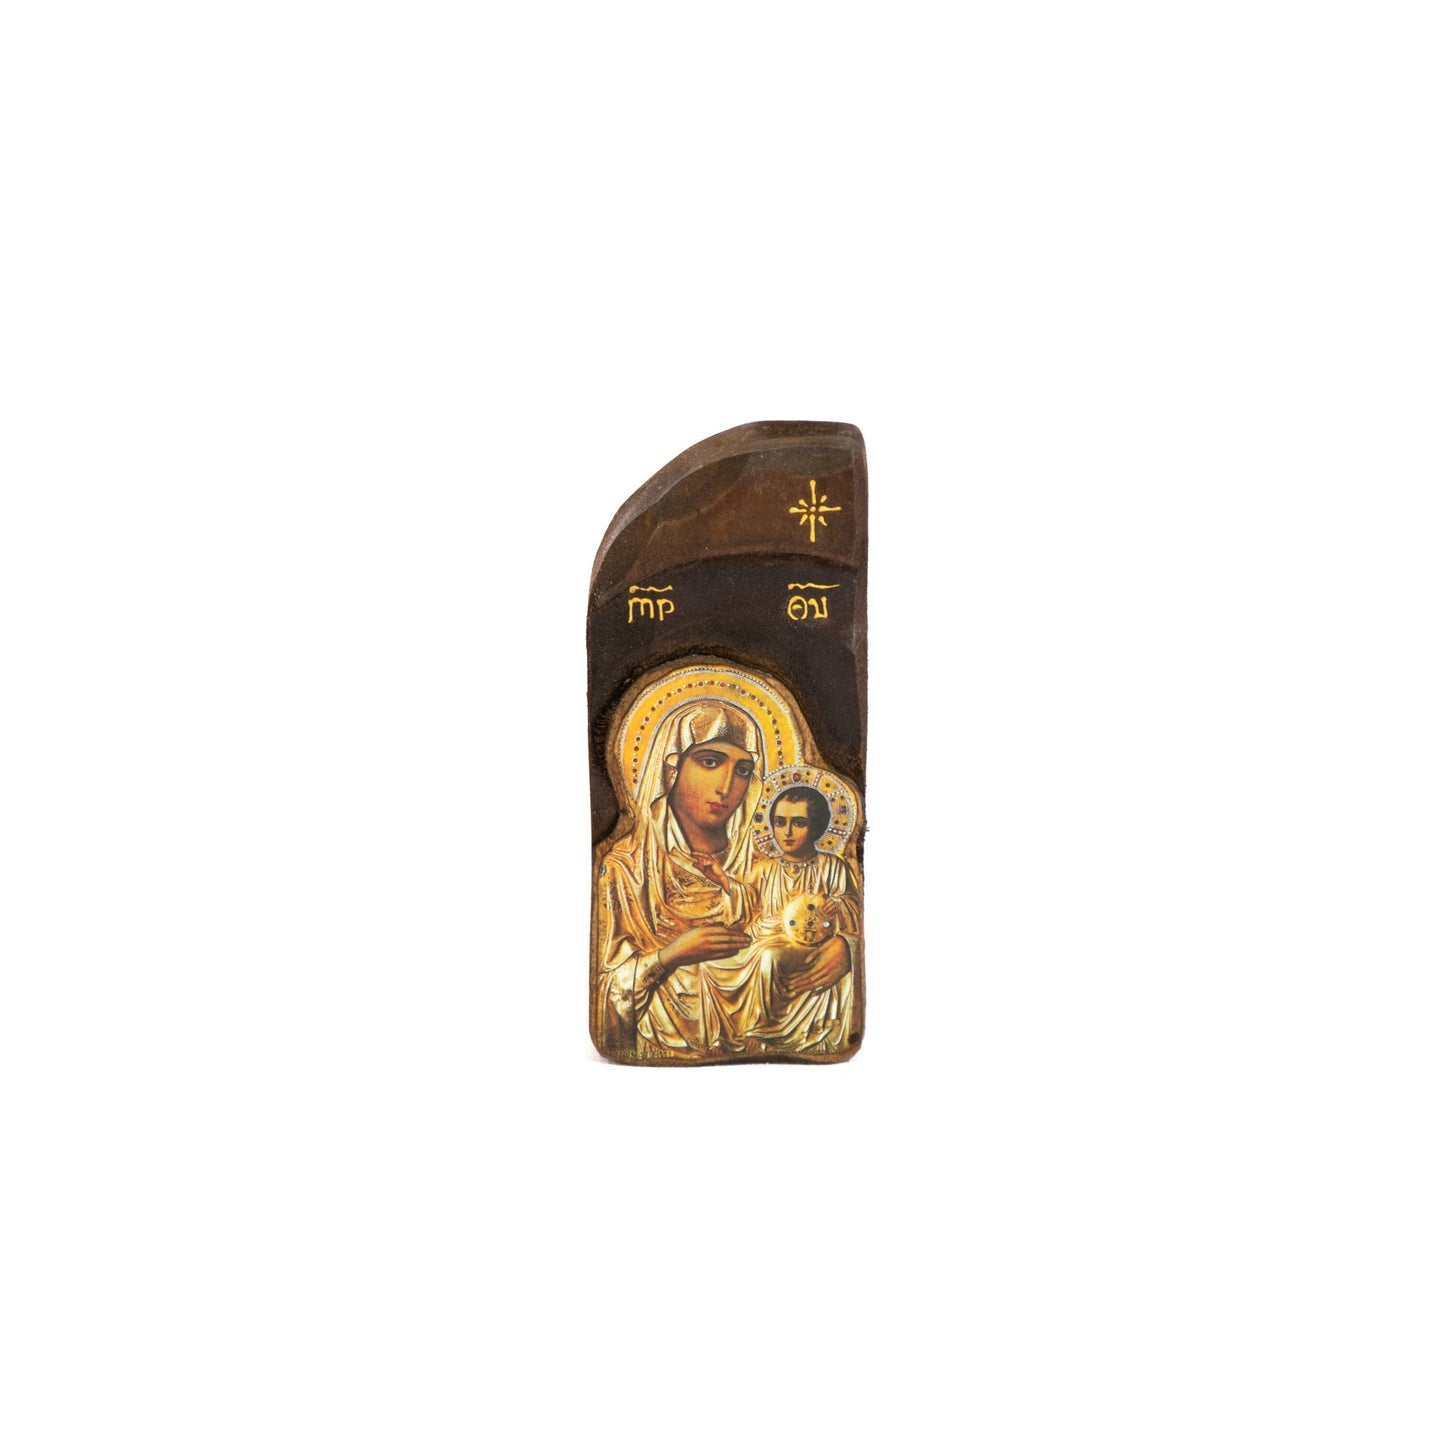 Virgin Mary icon Panagia Ierosolymitissa, Handmade Greek Orthodox Icon, Mother of God Byzantine art wall hanging, Theotokos wood plaque TheHolyArt